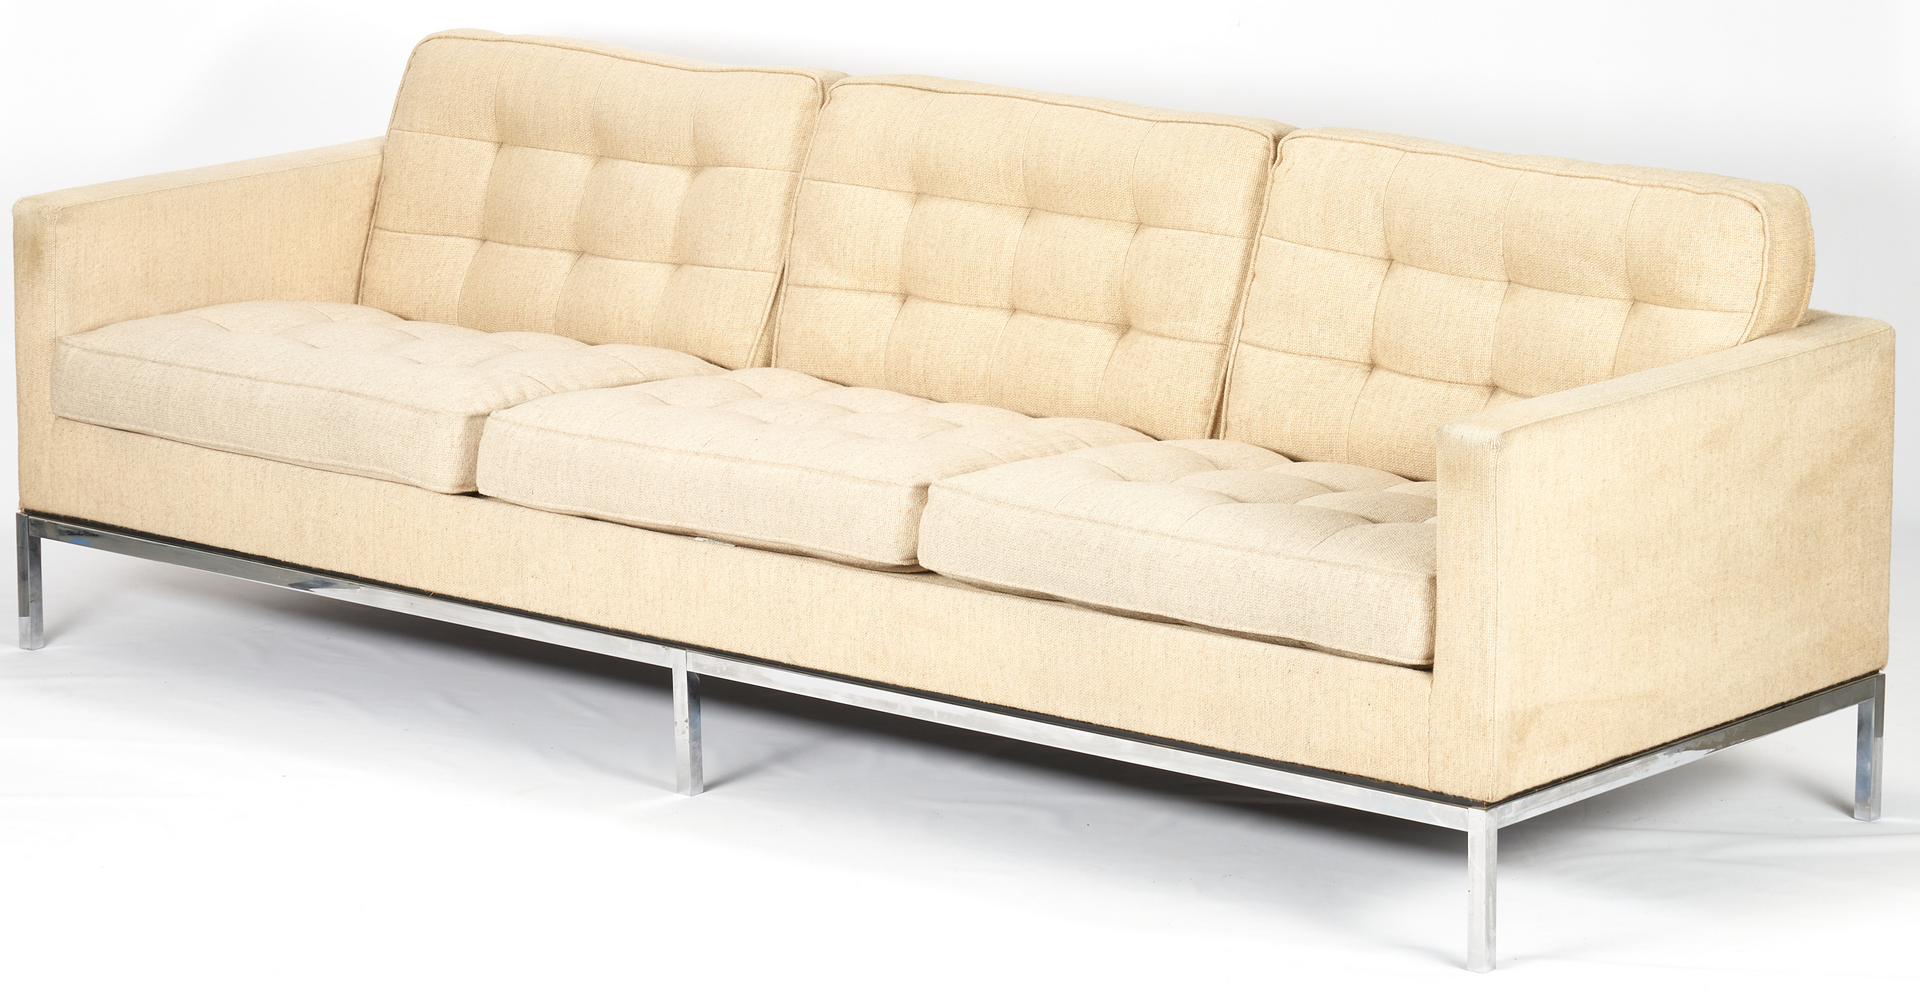 Lot 238: Mid-Century Knoll Parallel Bar System Sofa